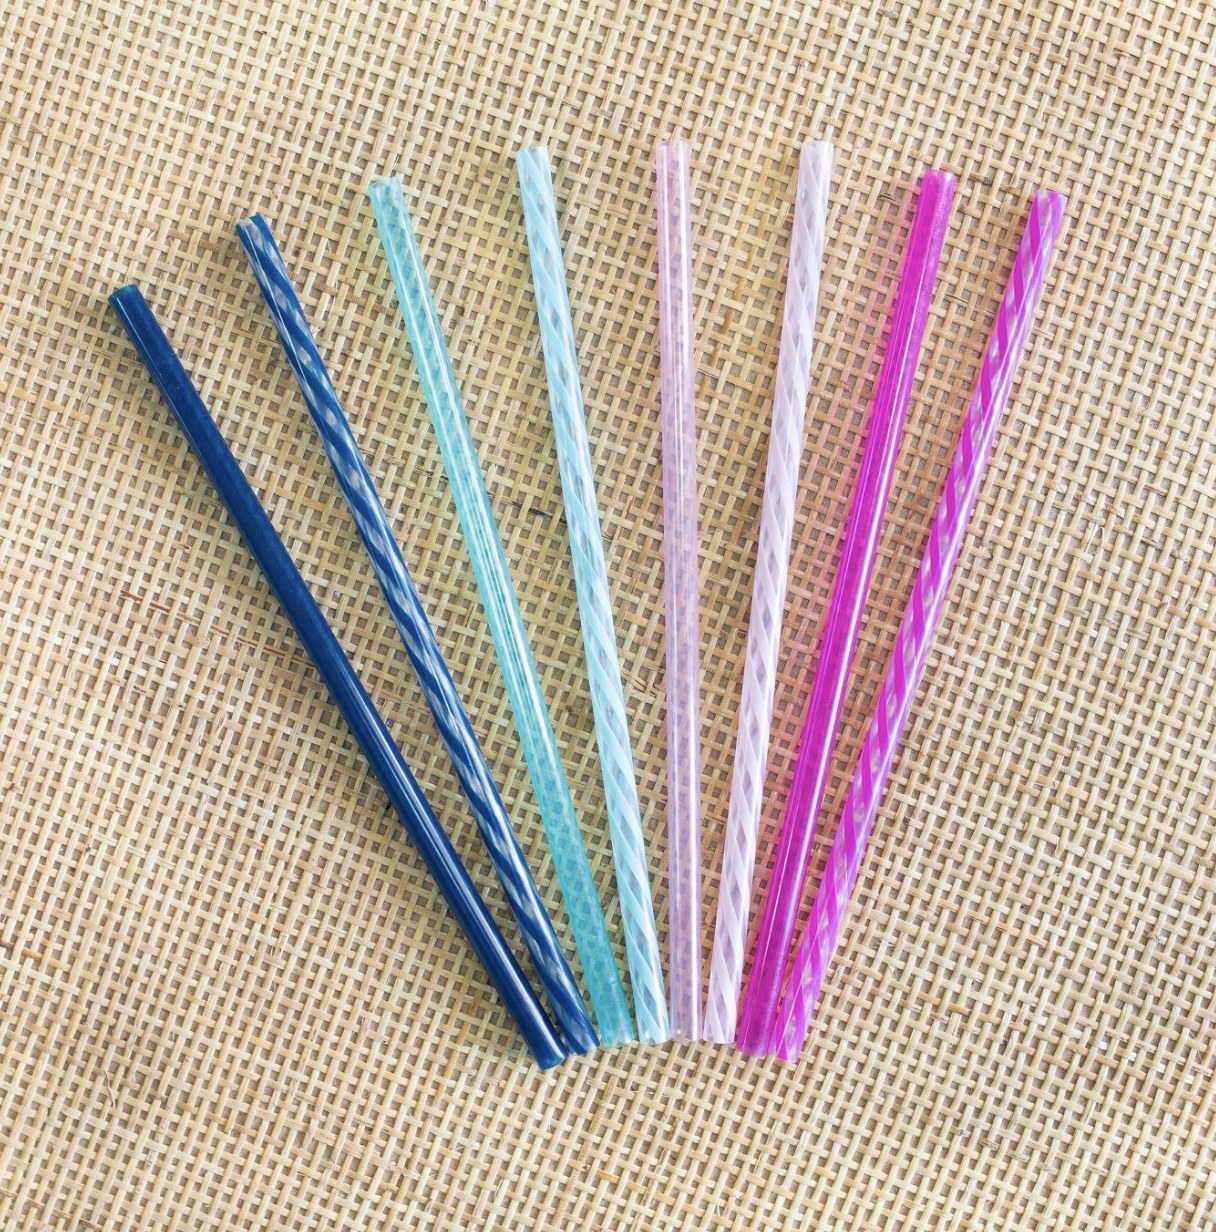 the straws